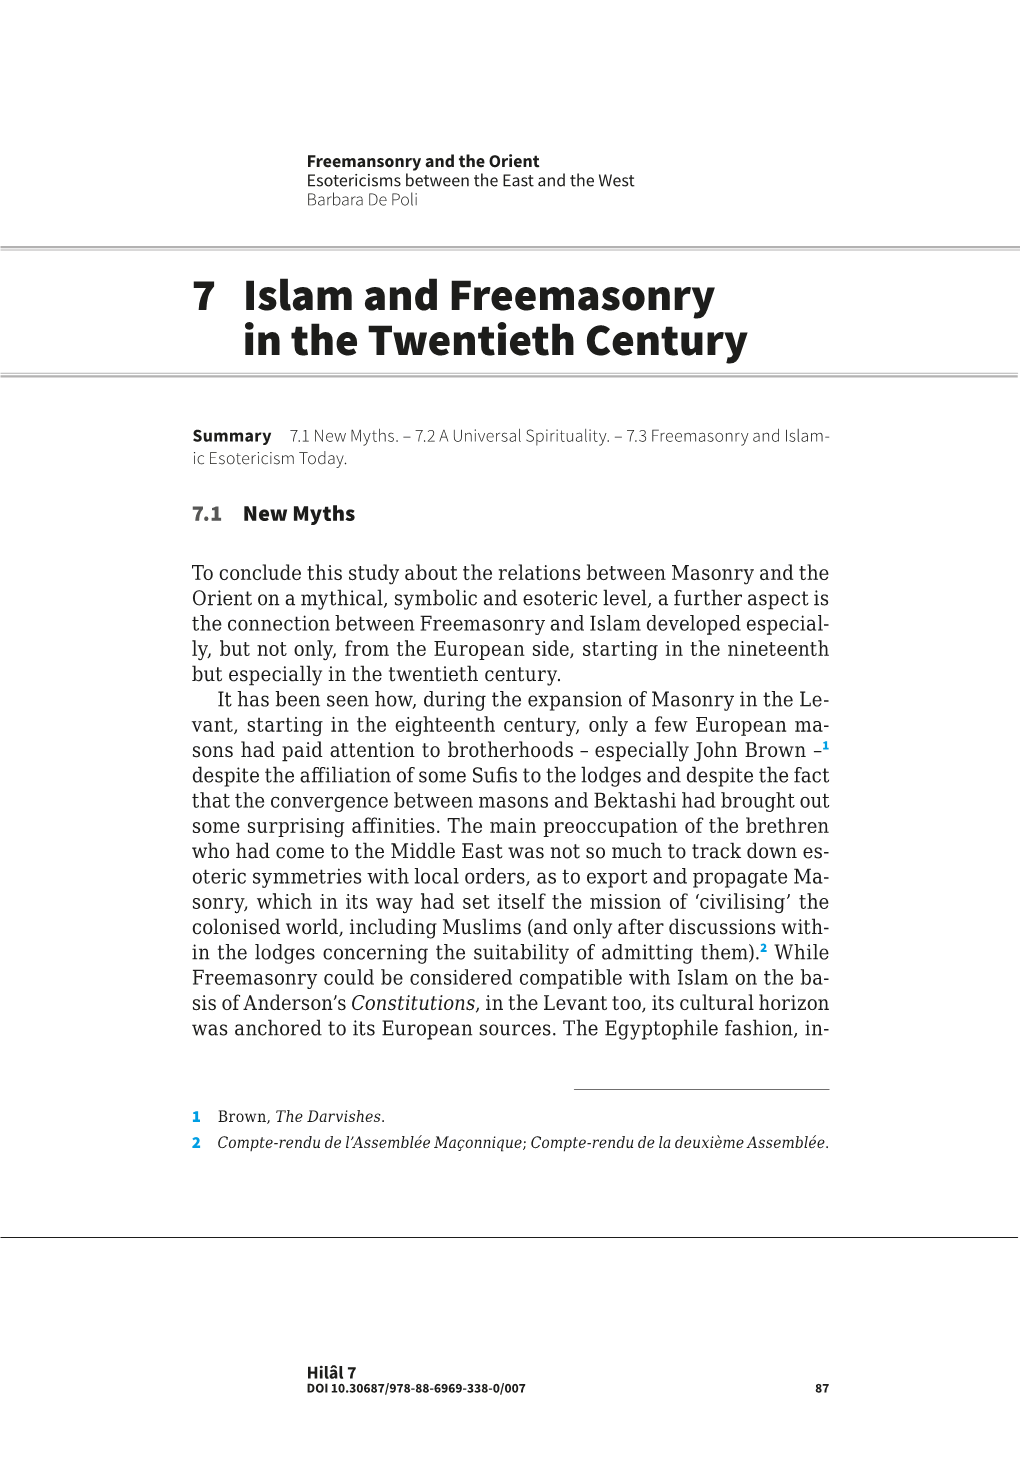 7 Islam and Freemasonry in the Twentieth Century